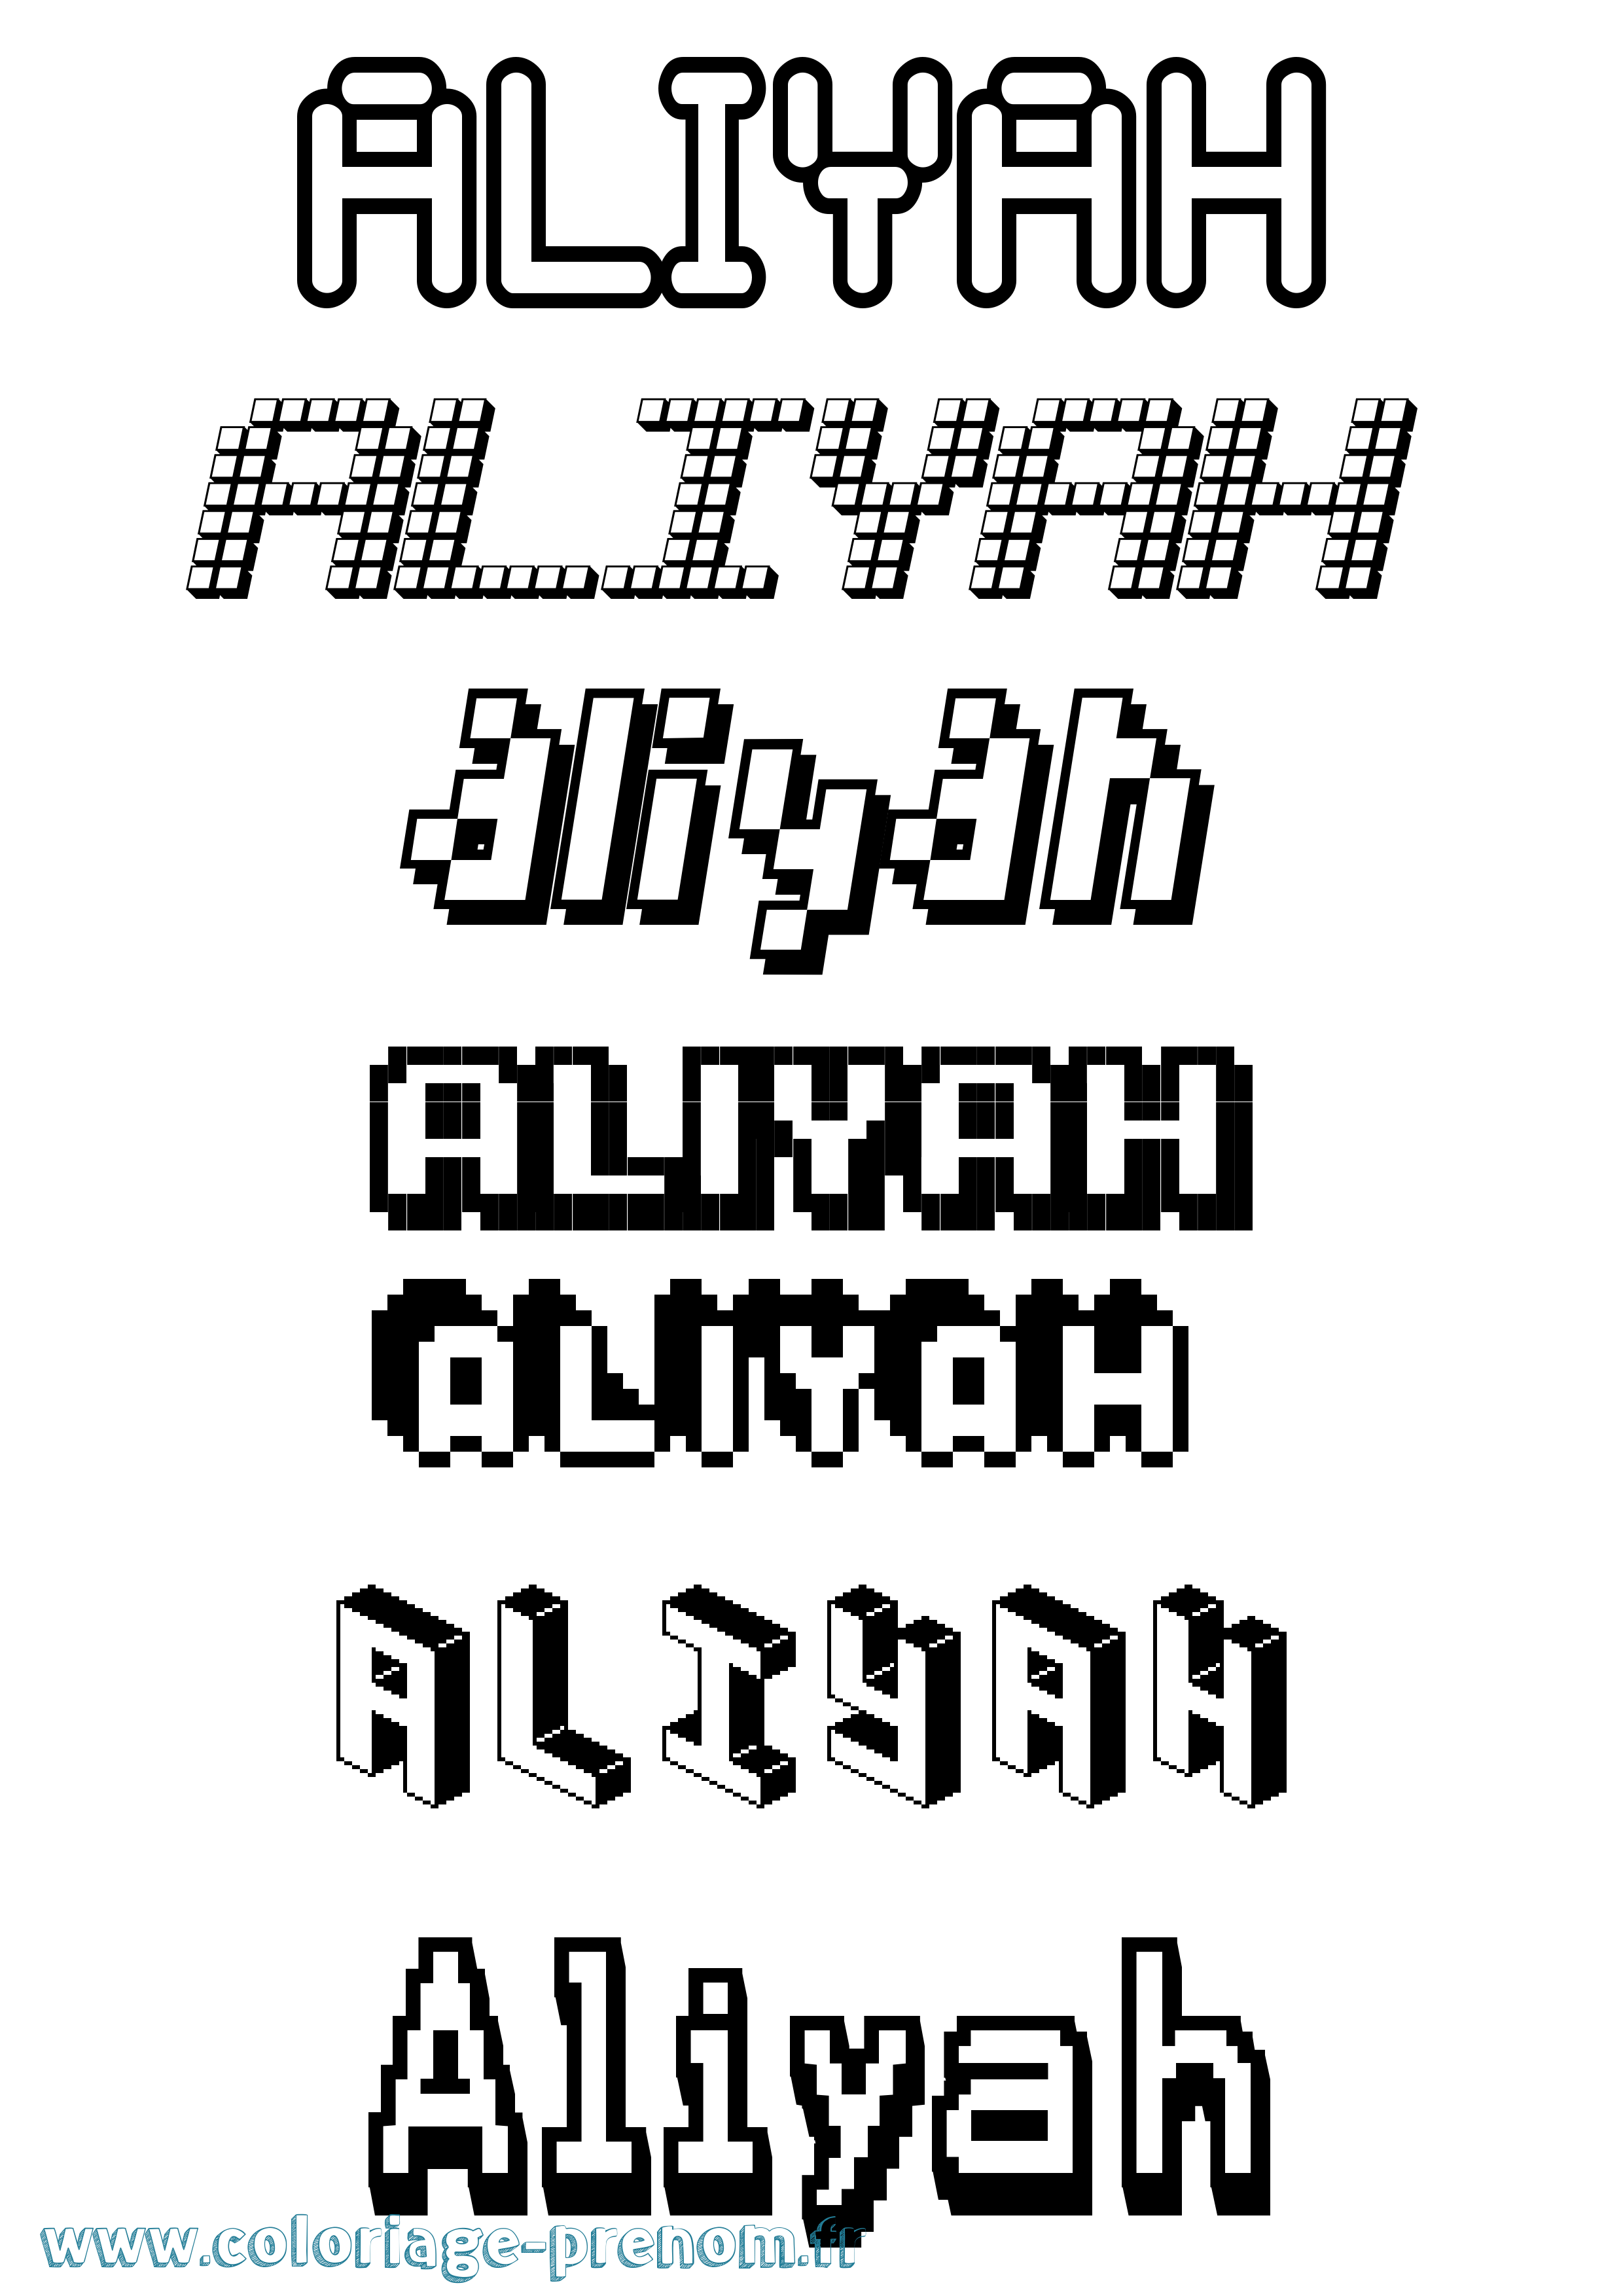 Coloriage prénom Aliyah